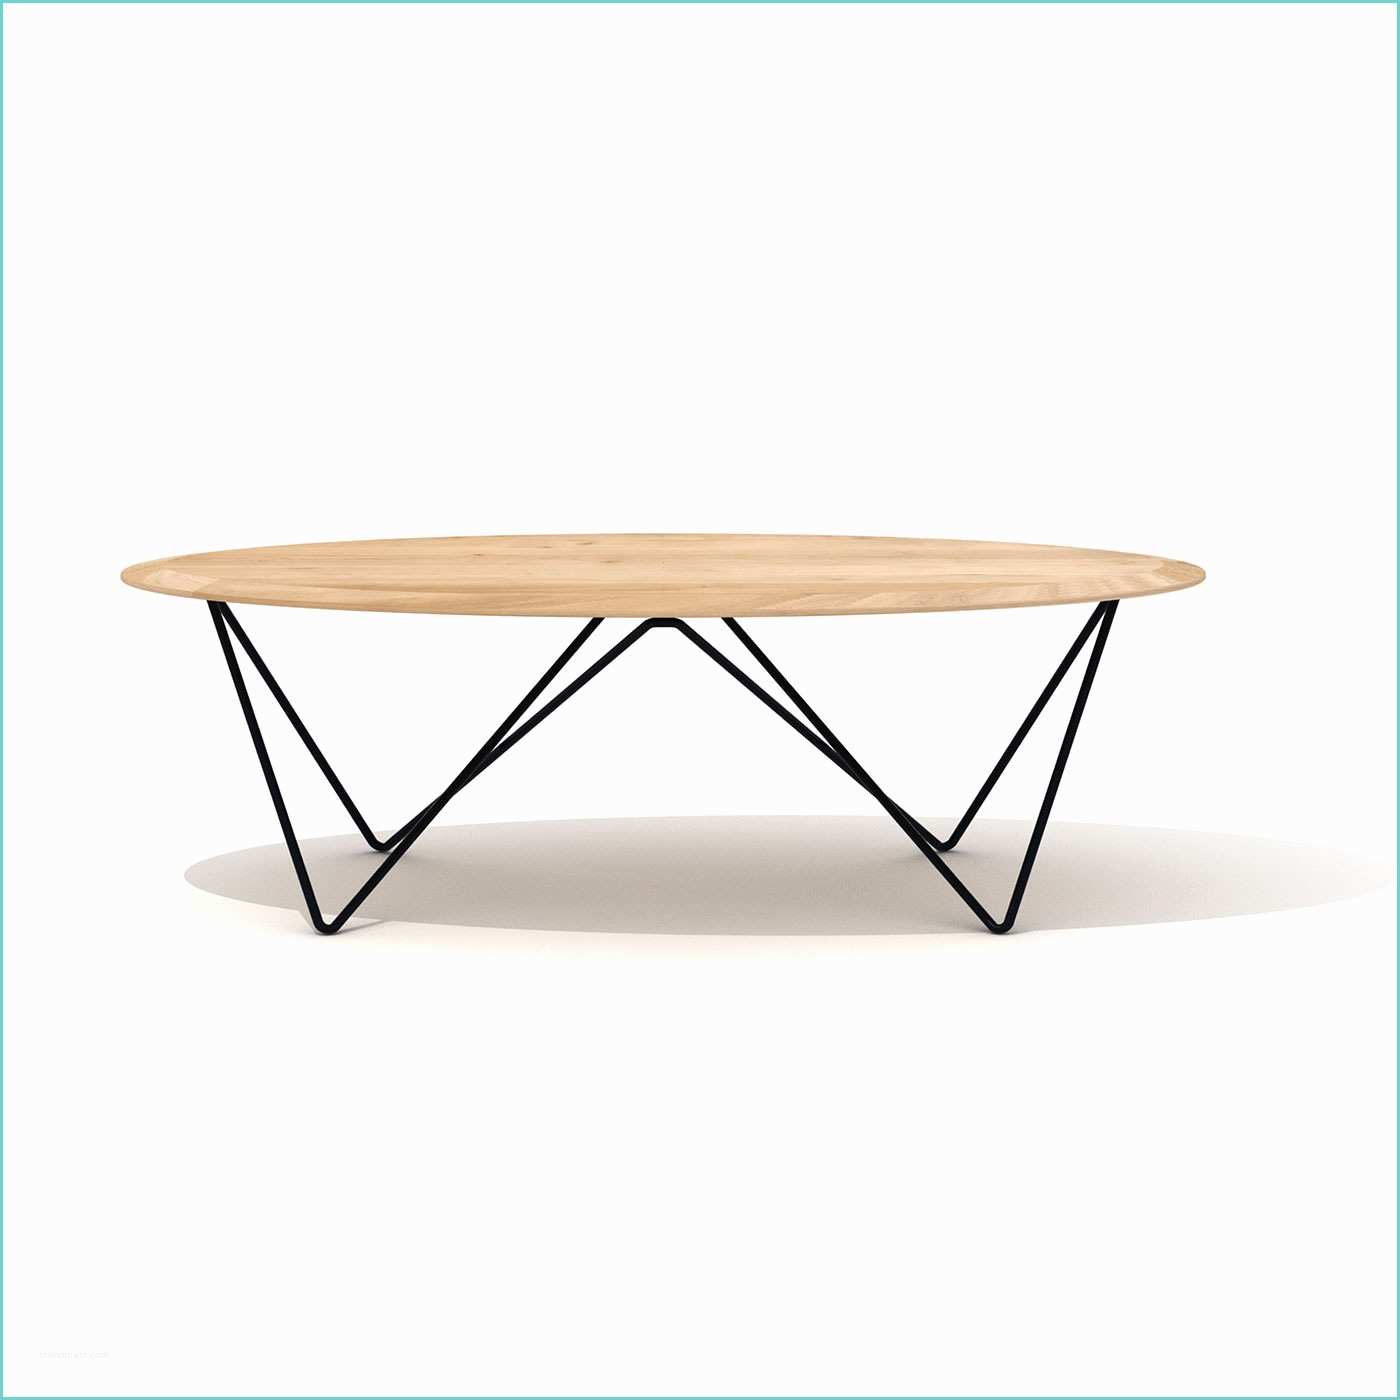 Table Basse Ovale Bois Petite Table Basse Ovale Achat Table Basse Design